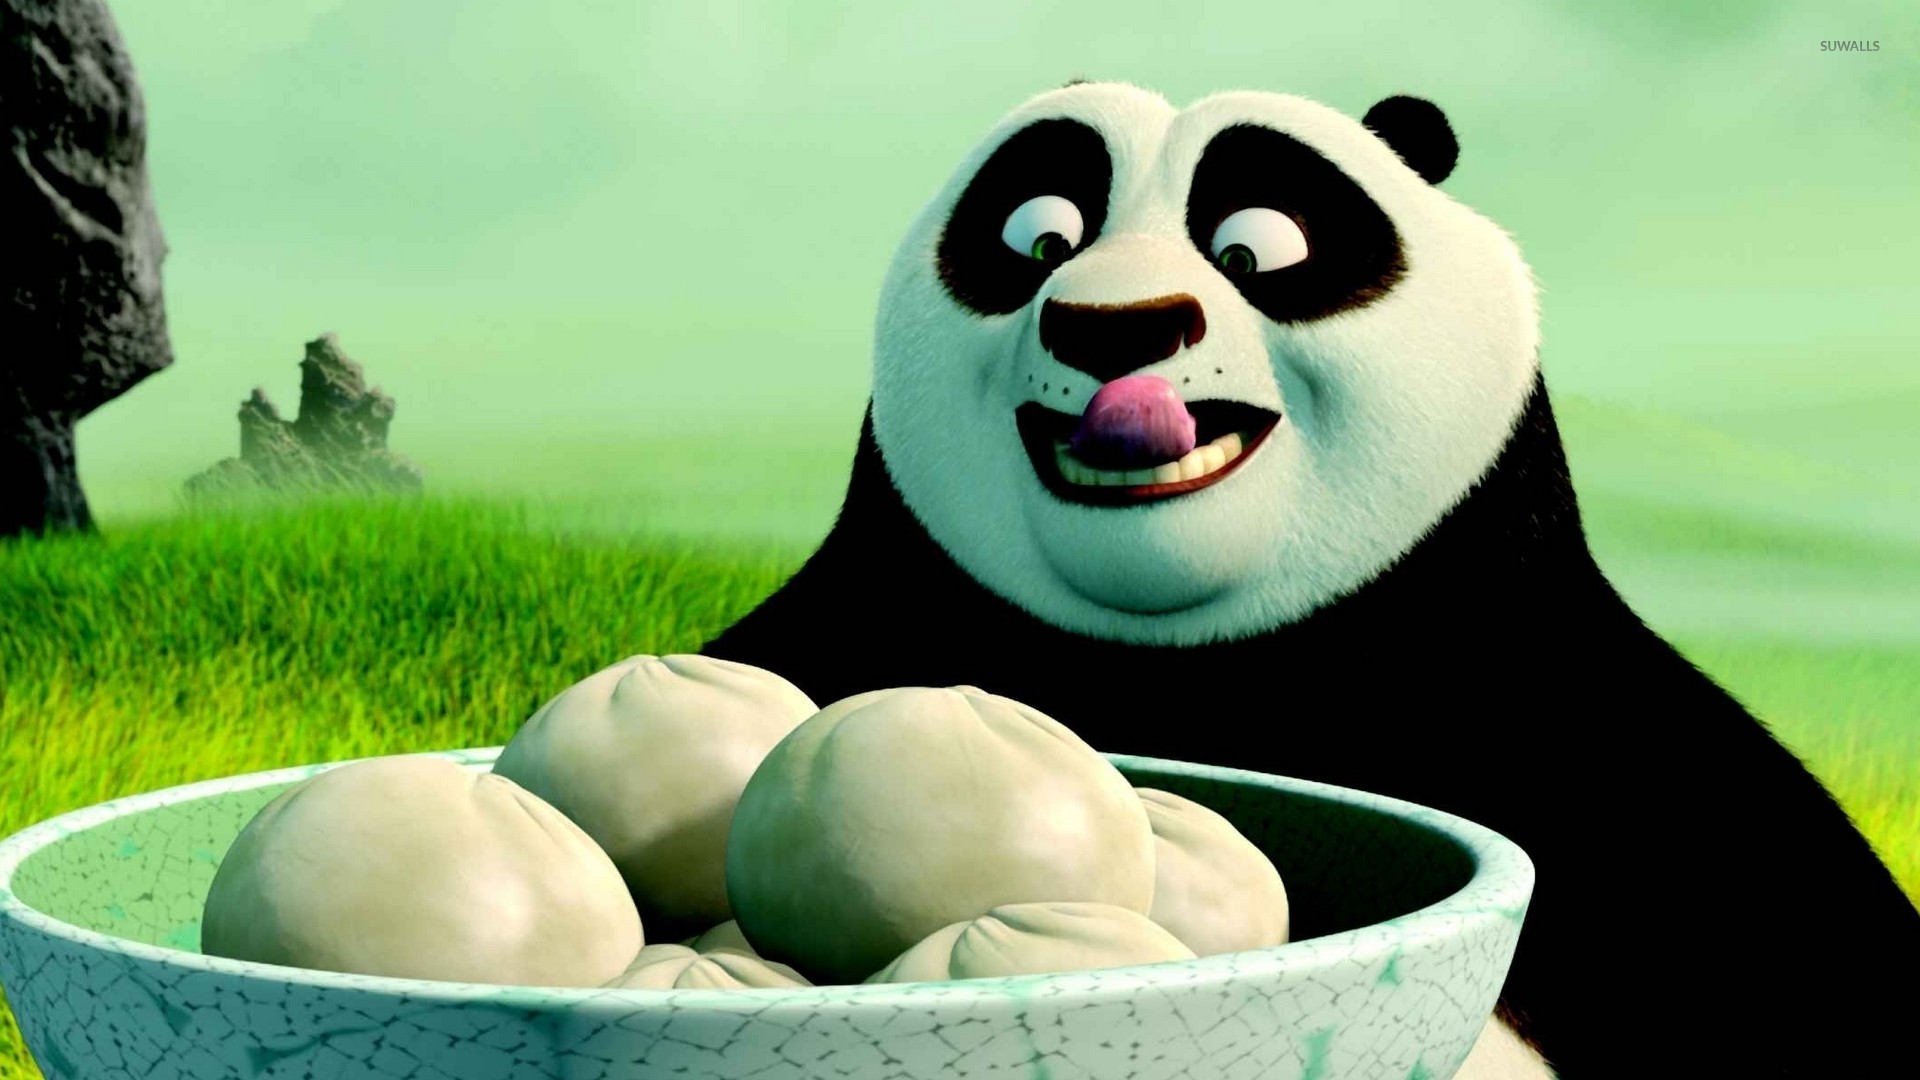 1920x1080 Po having dumplings - Kung Fu Panda wallpaper  jpg